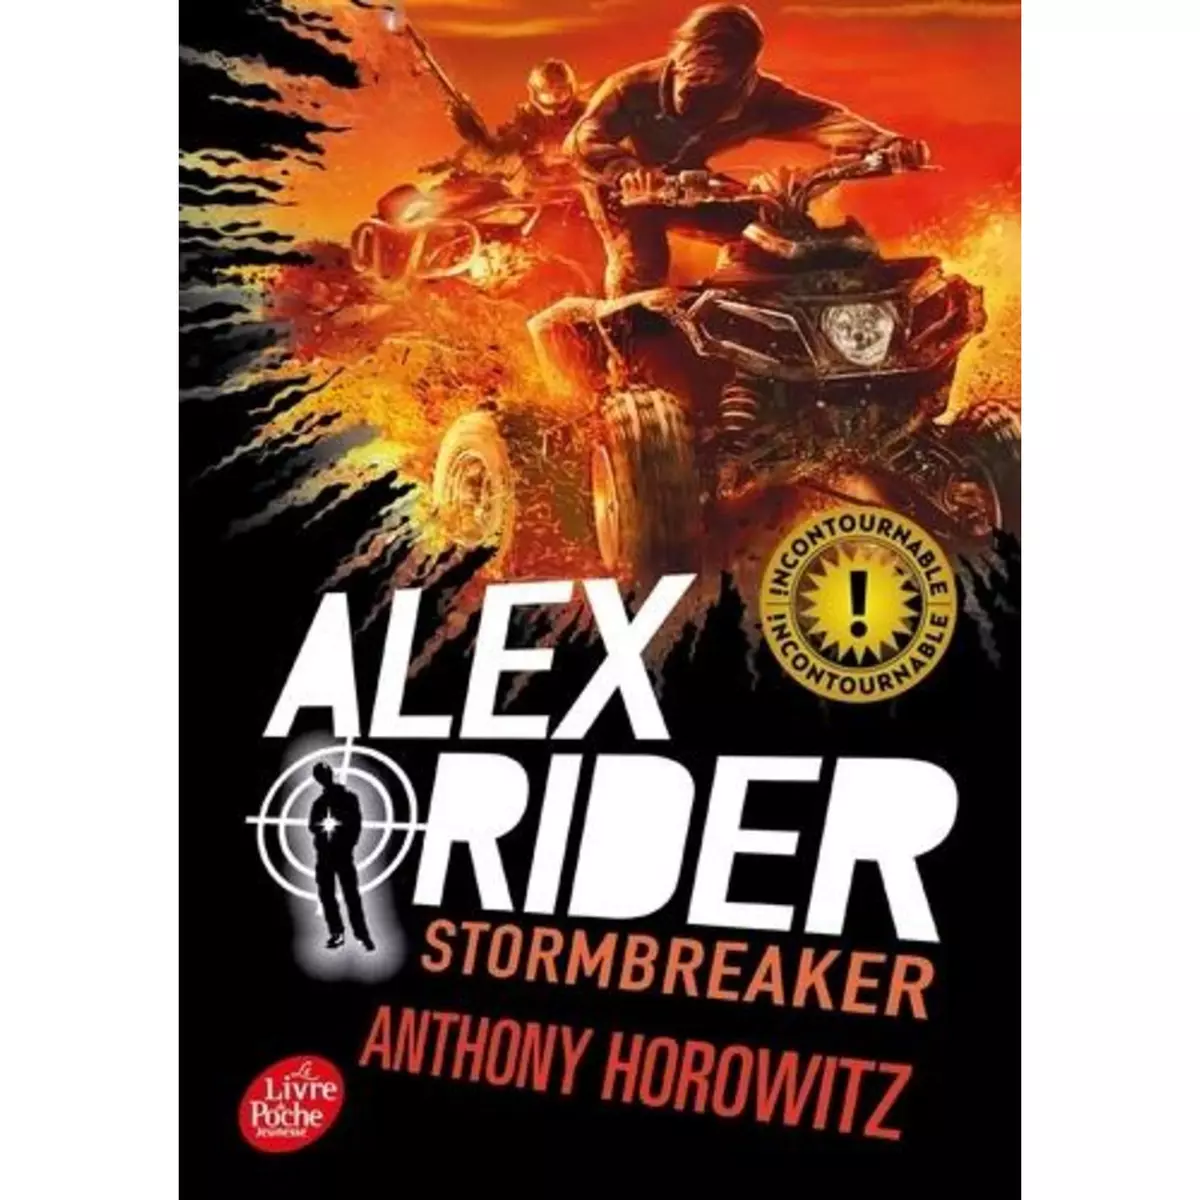  ALEX RIDER TOME 1 : STORMBREAKER, Horowitz Anthony